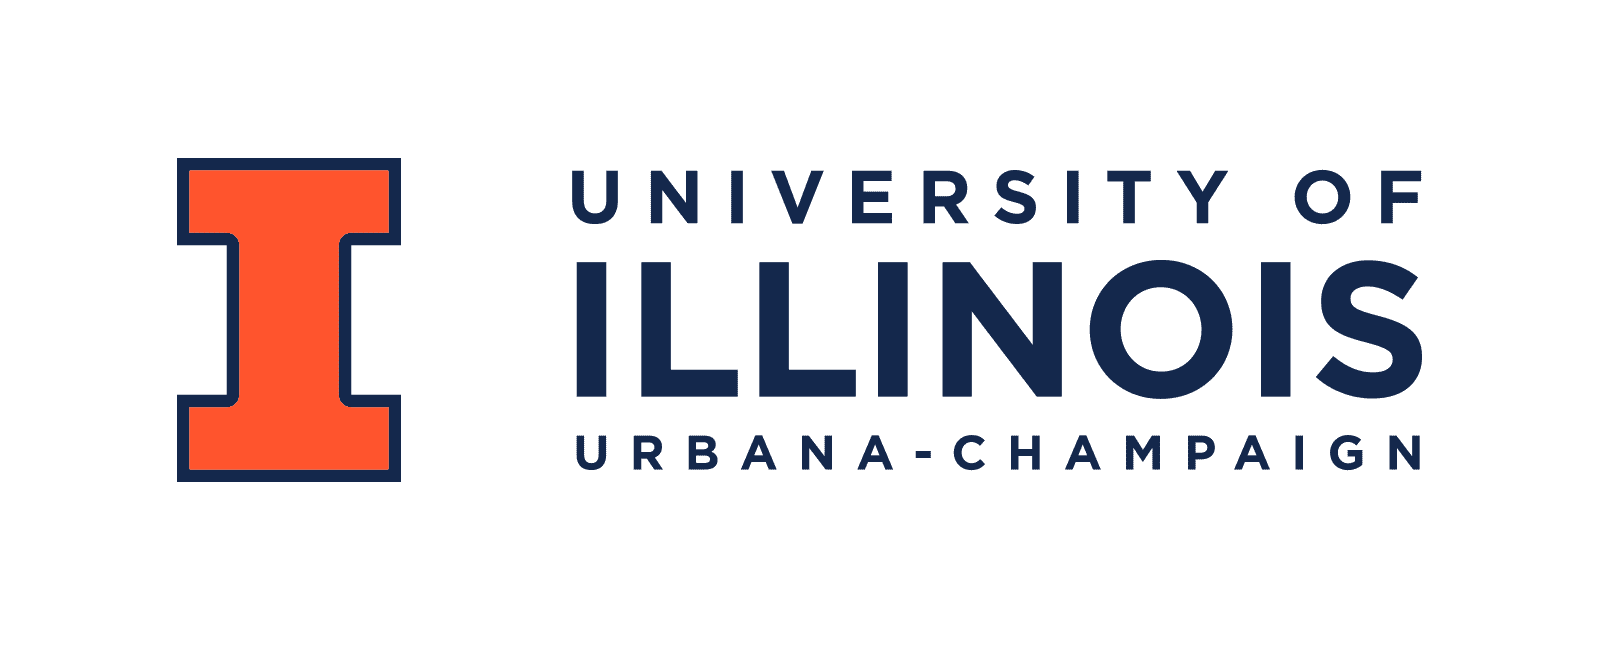 University of Illinois at Urbana-Champaign